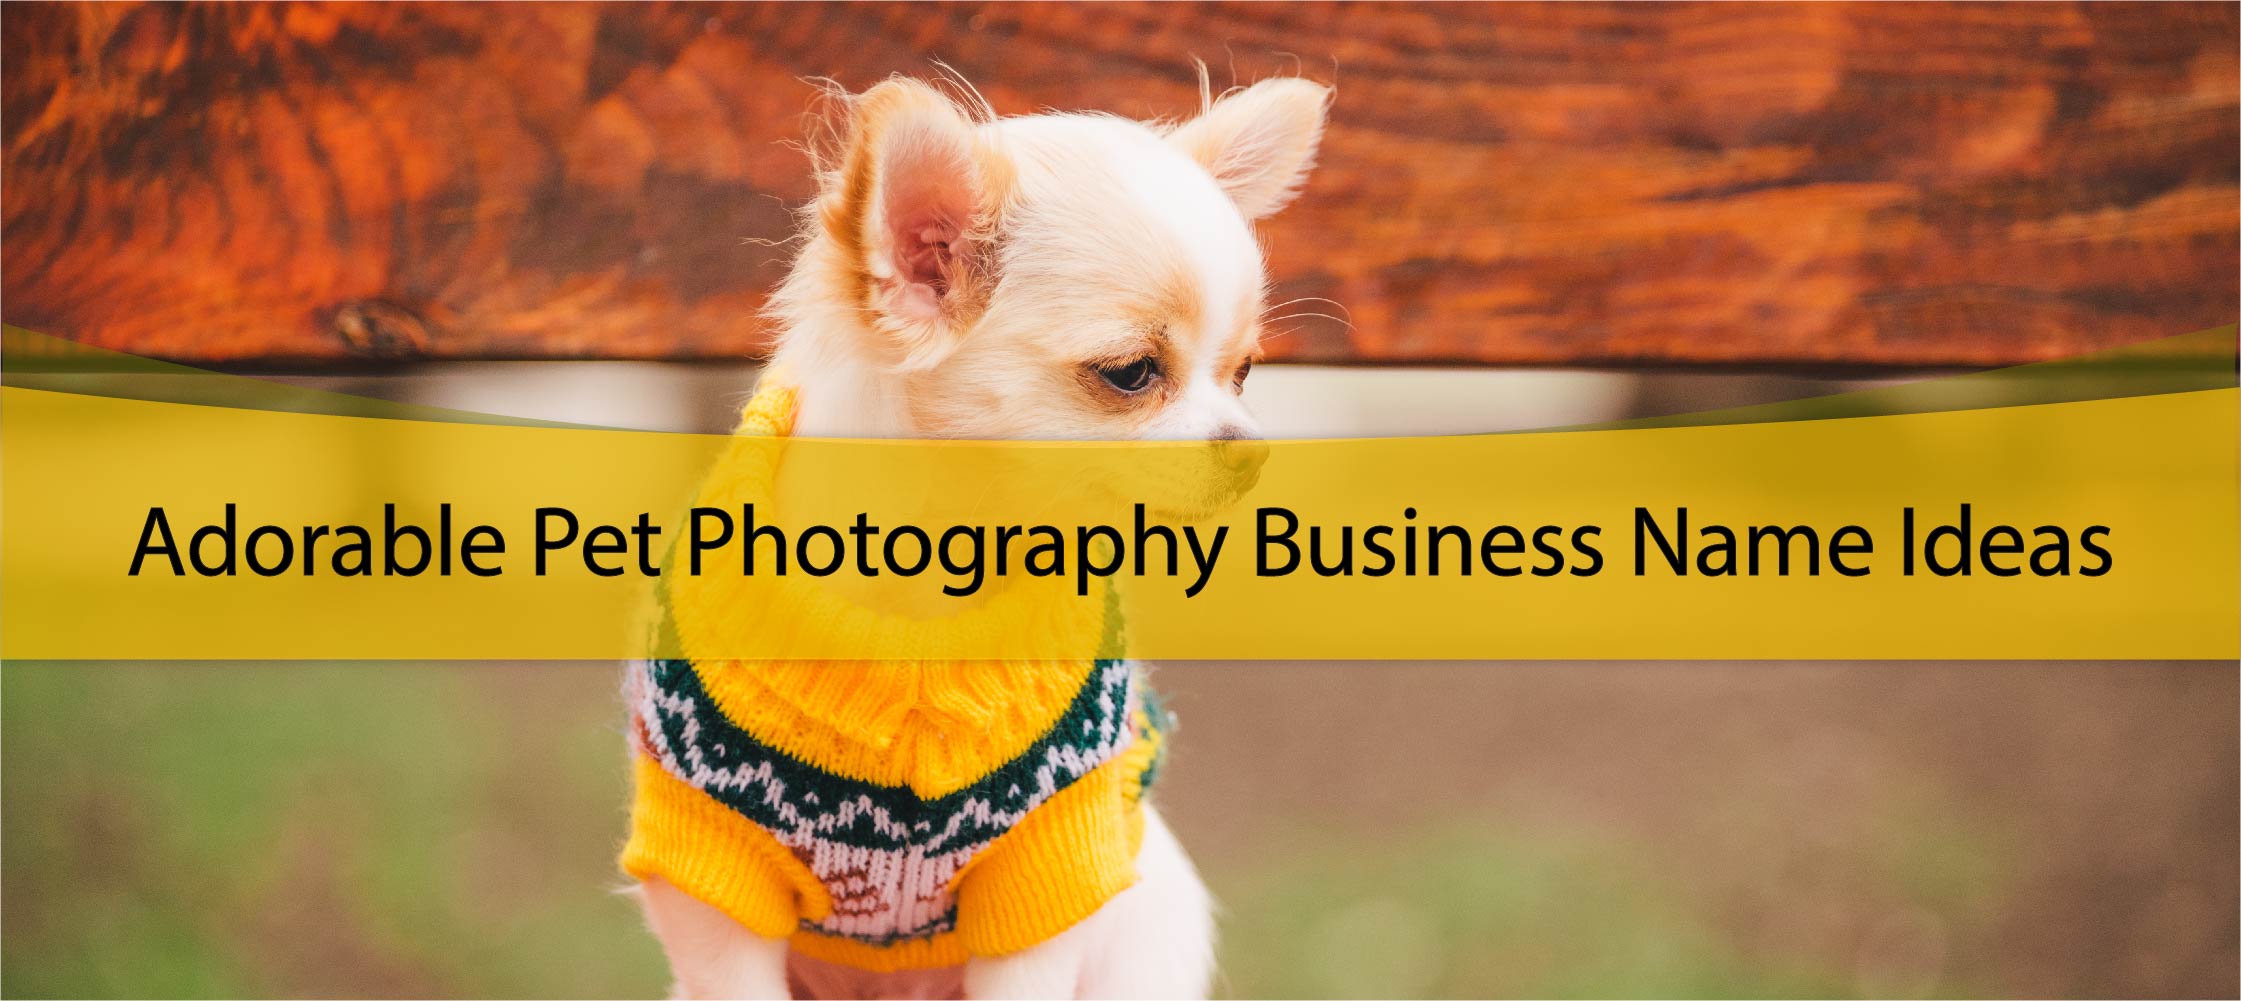 Adorable Pet Photography Business Name Ideas